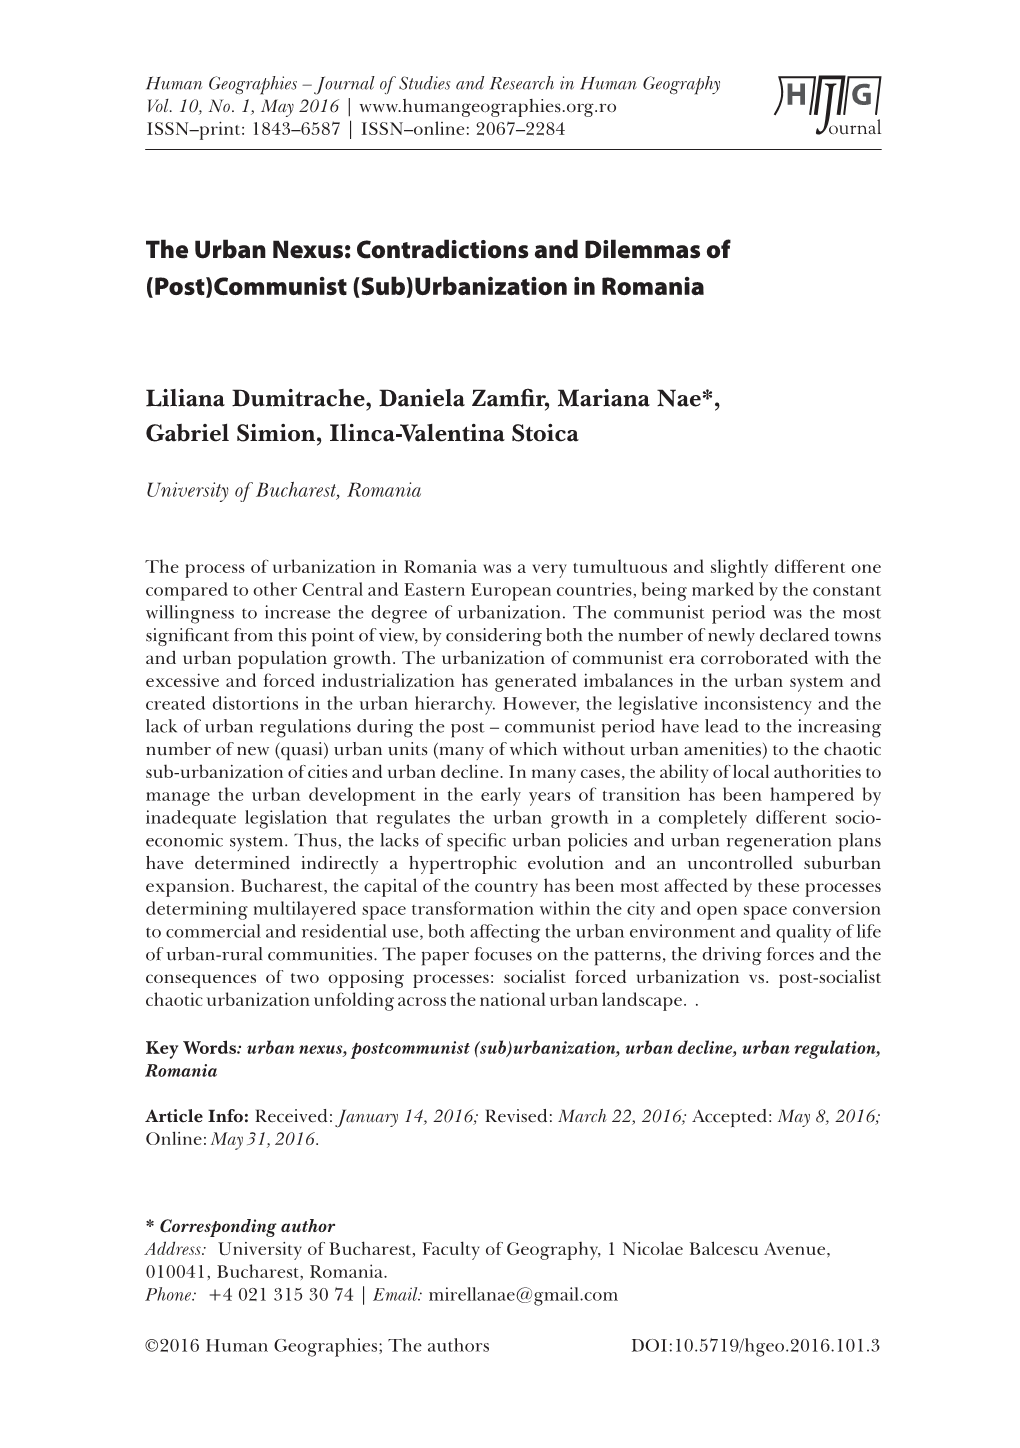 The Urban Nexus: Contradictions and Dilemmas of (Post)Communist (Sub)Urbanization in Romania